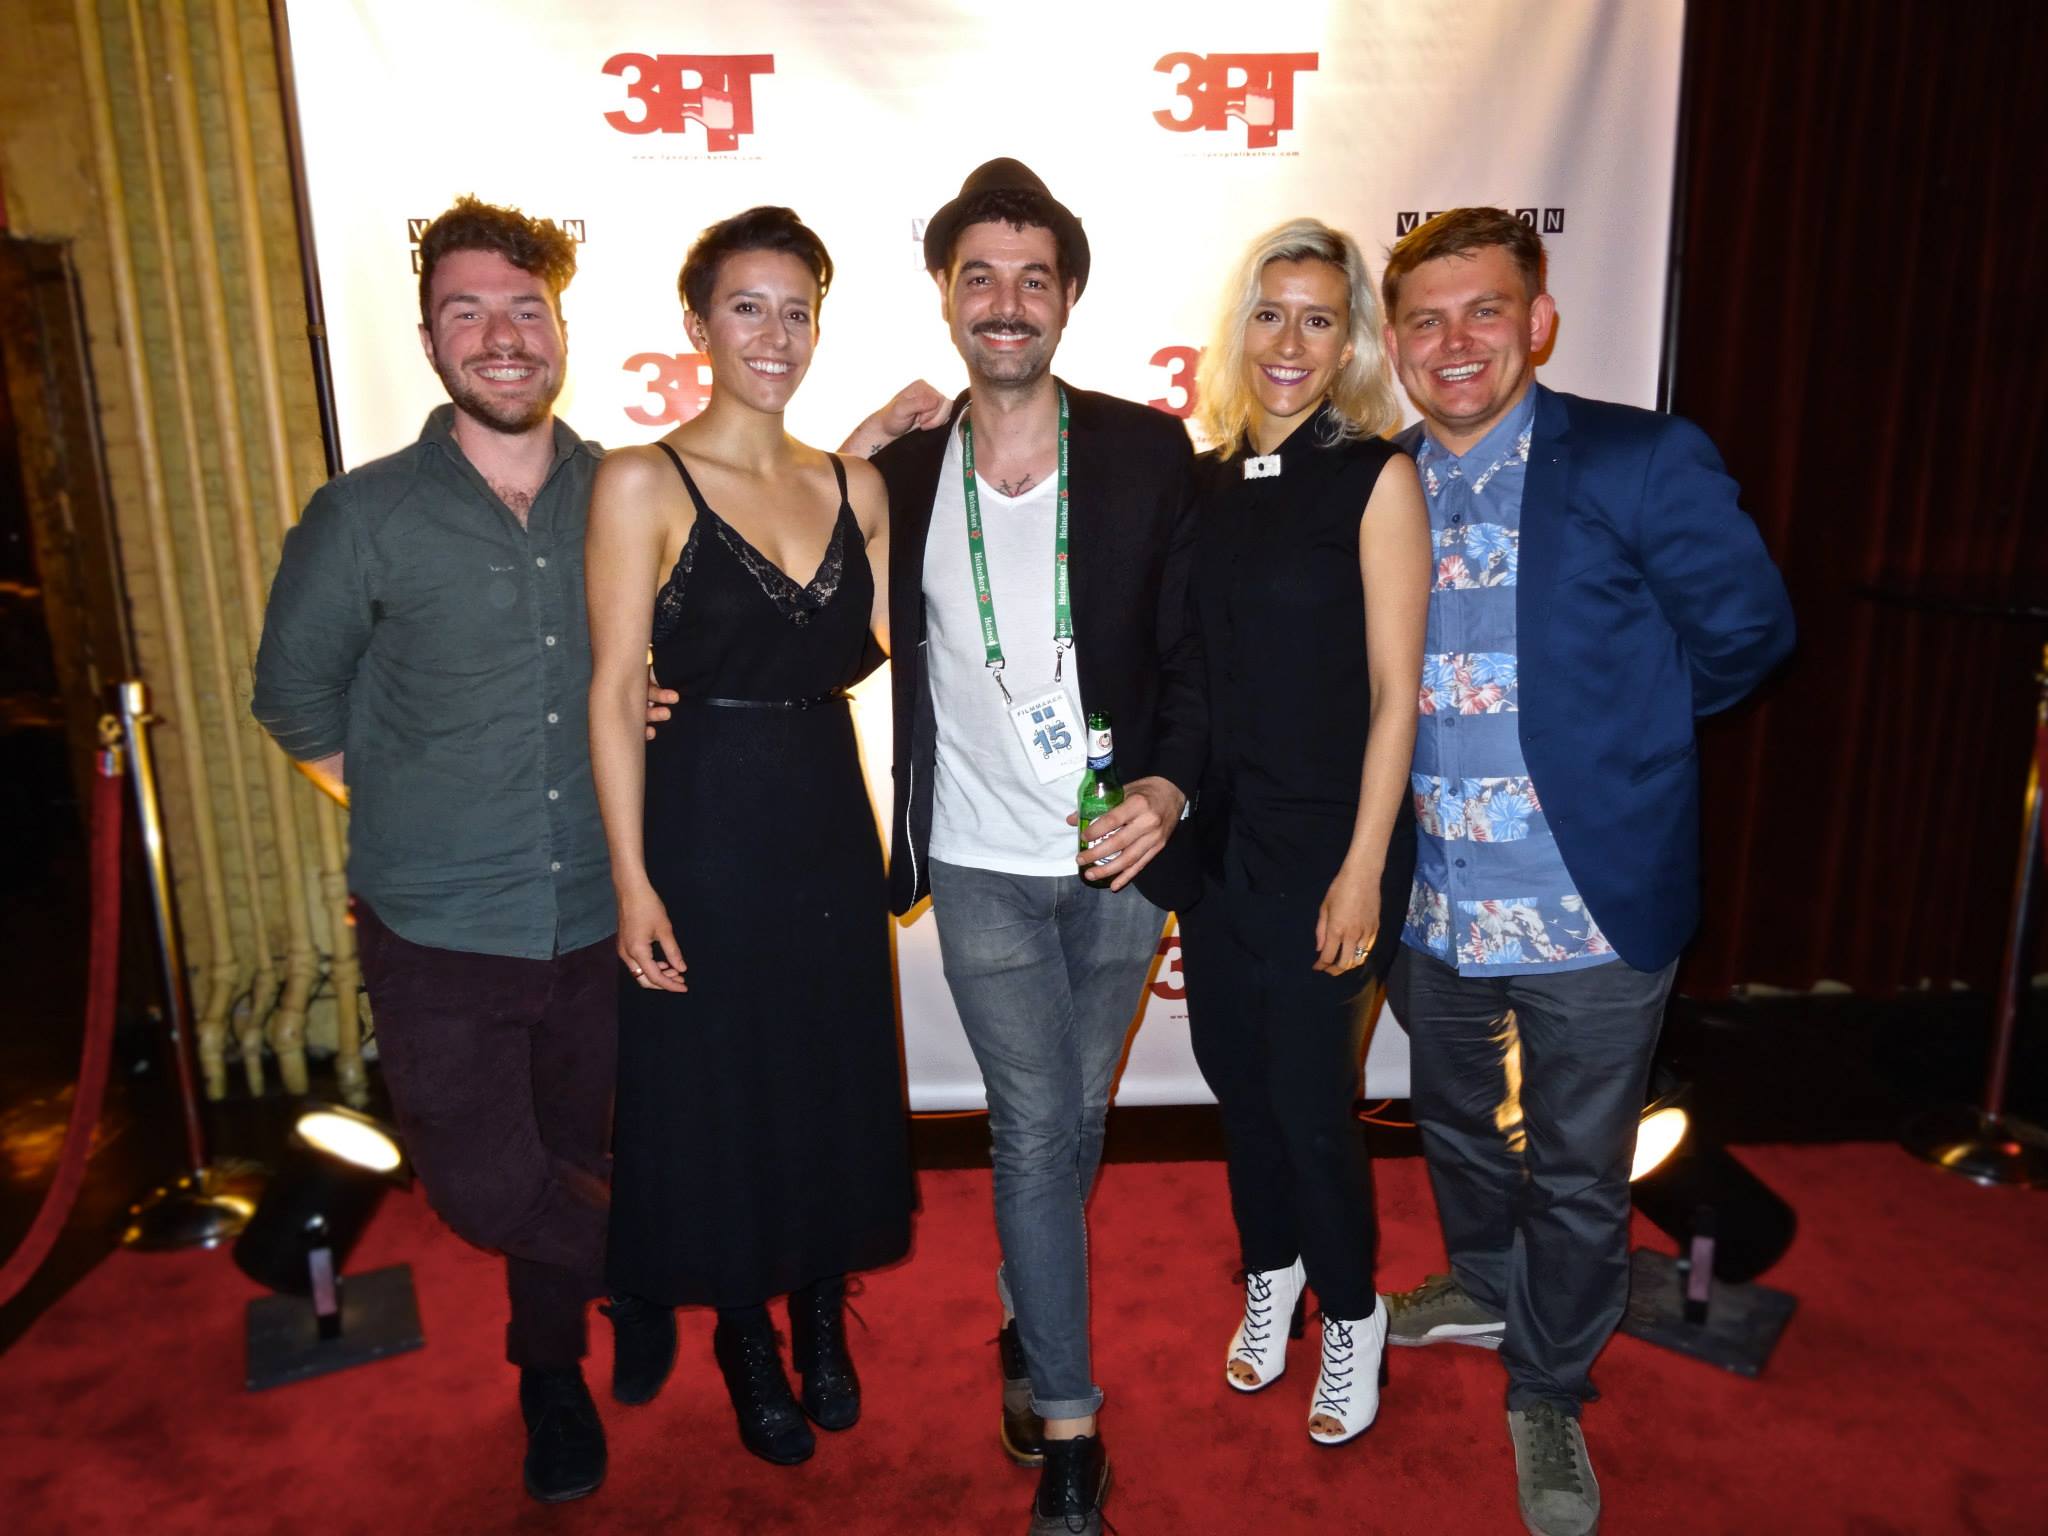 Broken Jam 2014 - Vision Fest 2015 @ Tribeca Cinemas, NYC (Left to Right) Jesse Deganis, Ashley Carvalho, Emanuele Michetti, Kimberly Carvalho, Peter Waluk